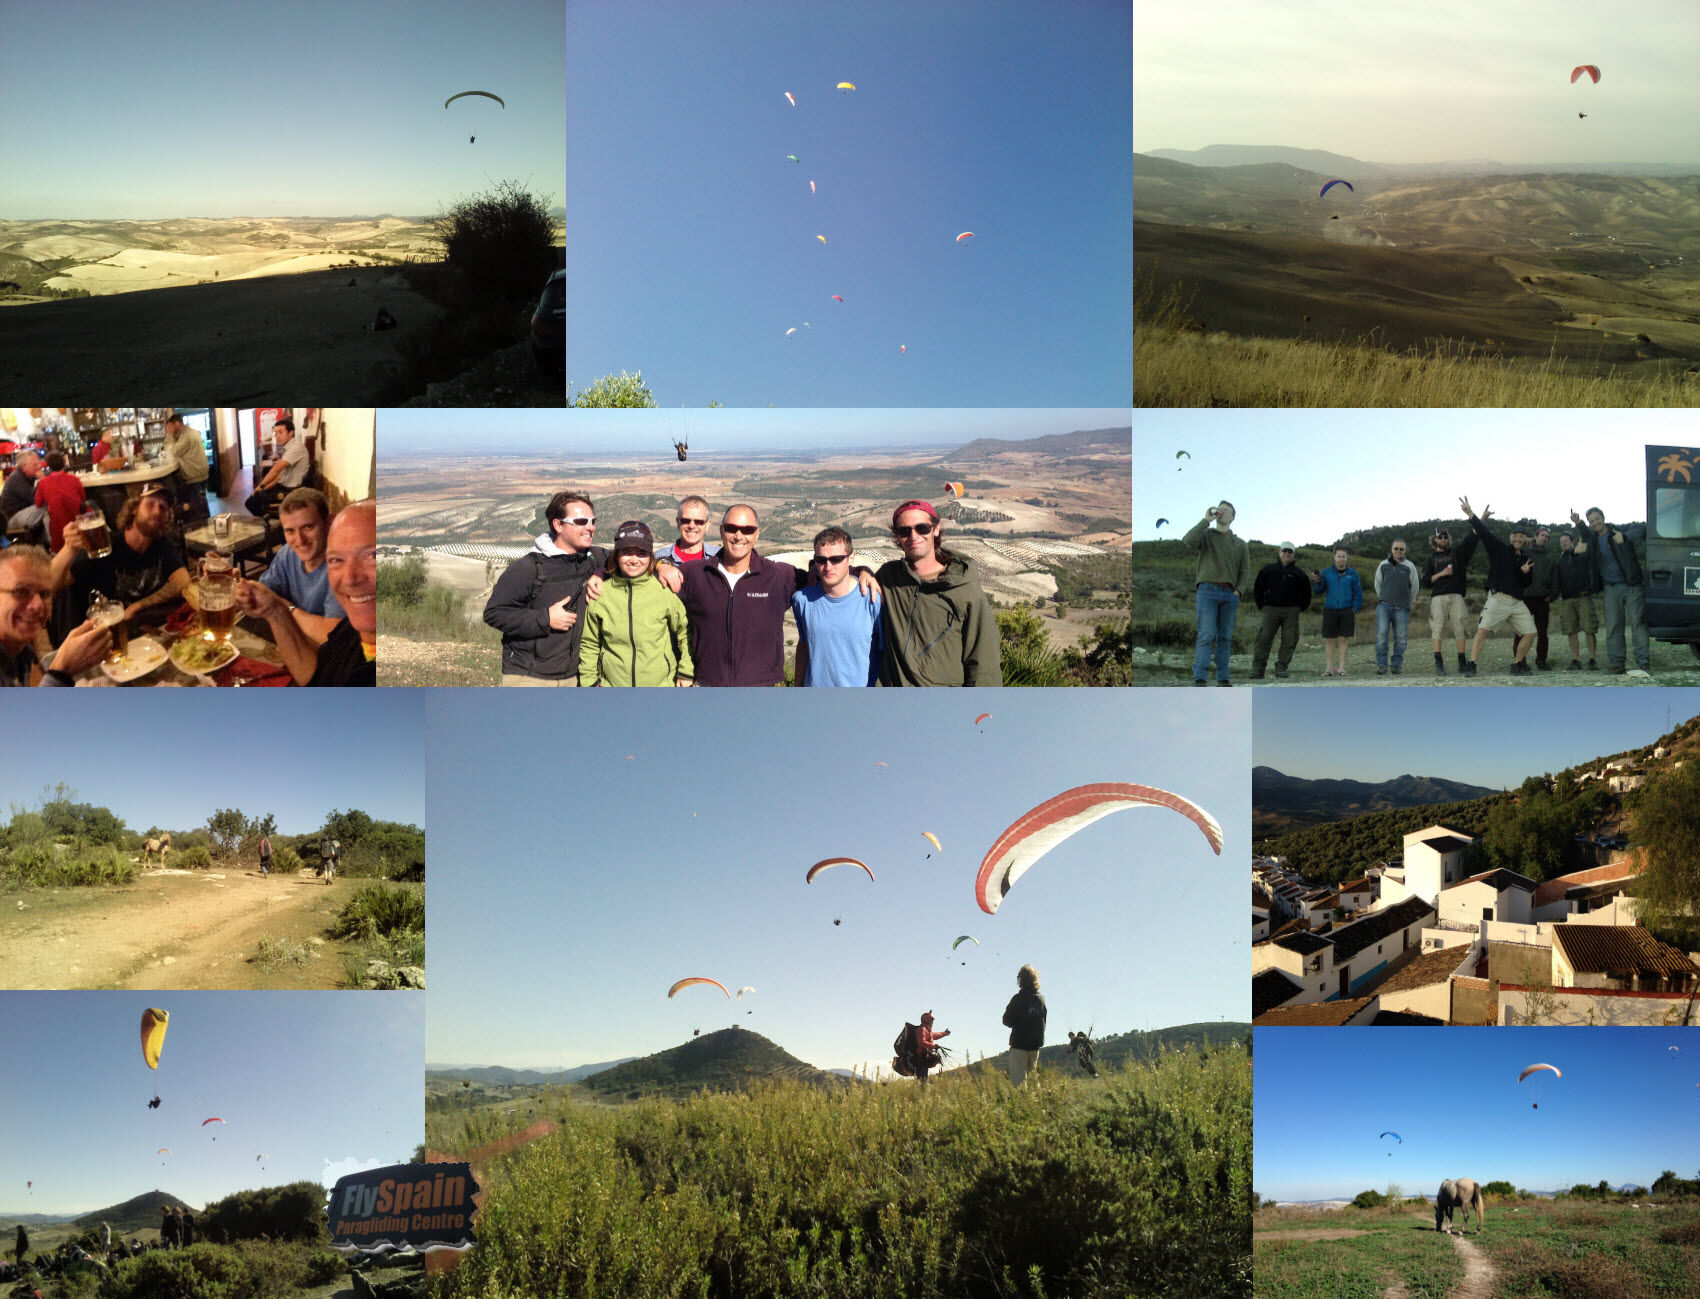 December Beginners paragliding course for 2013 is mega popular